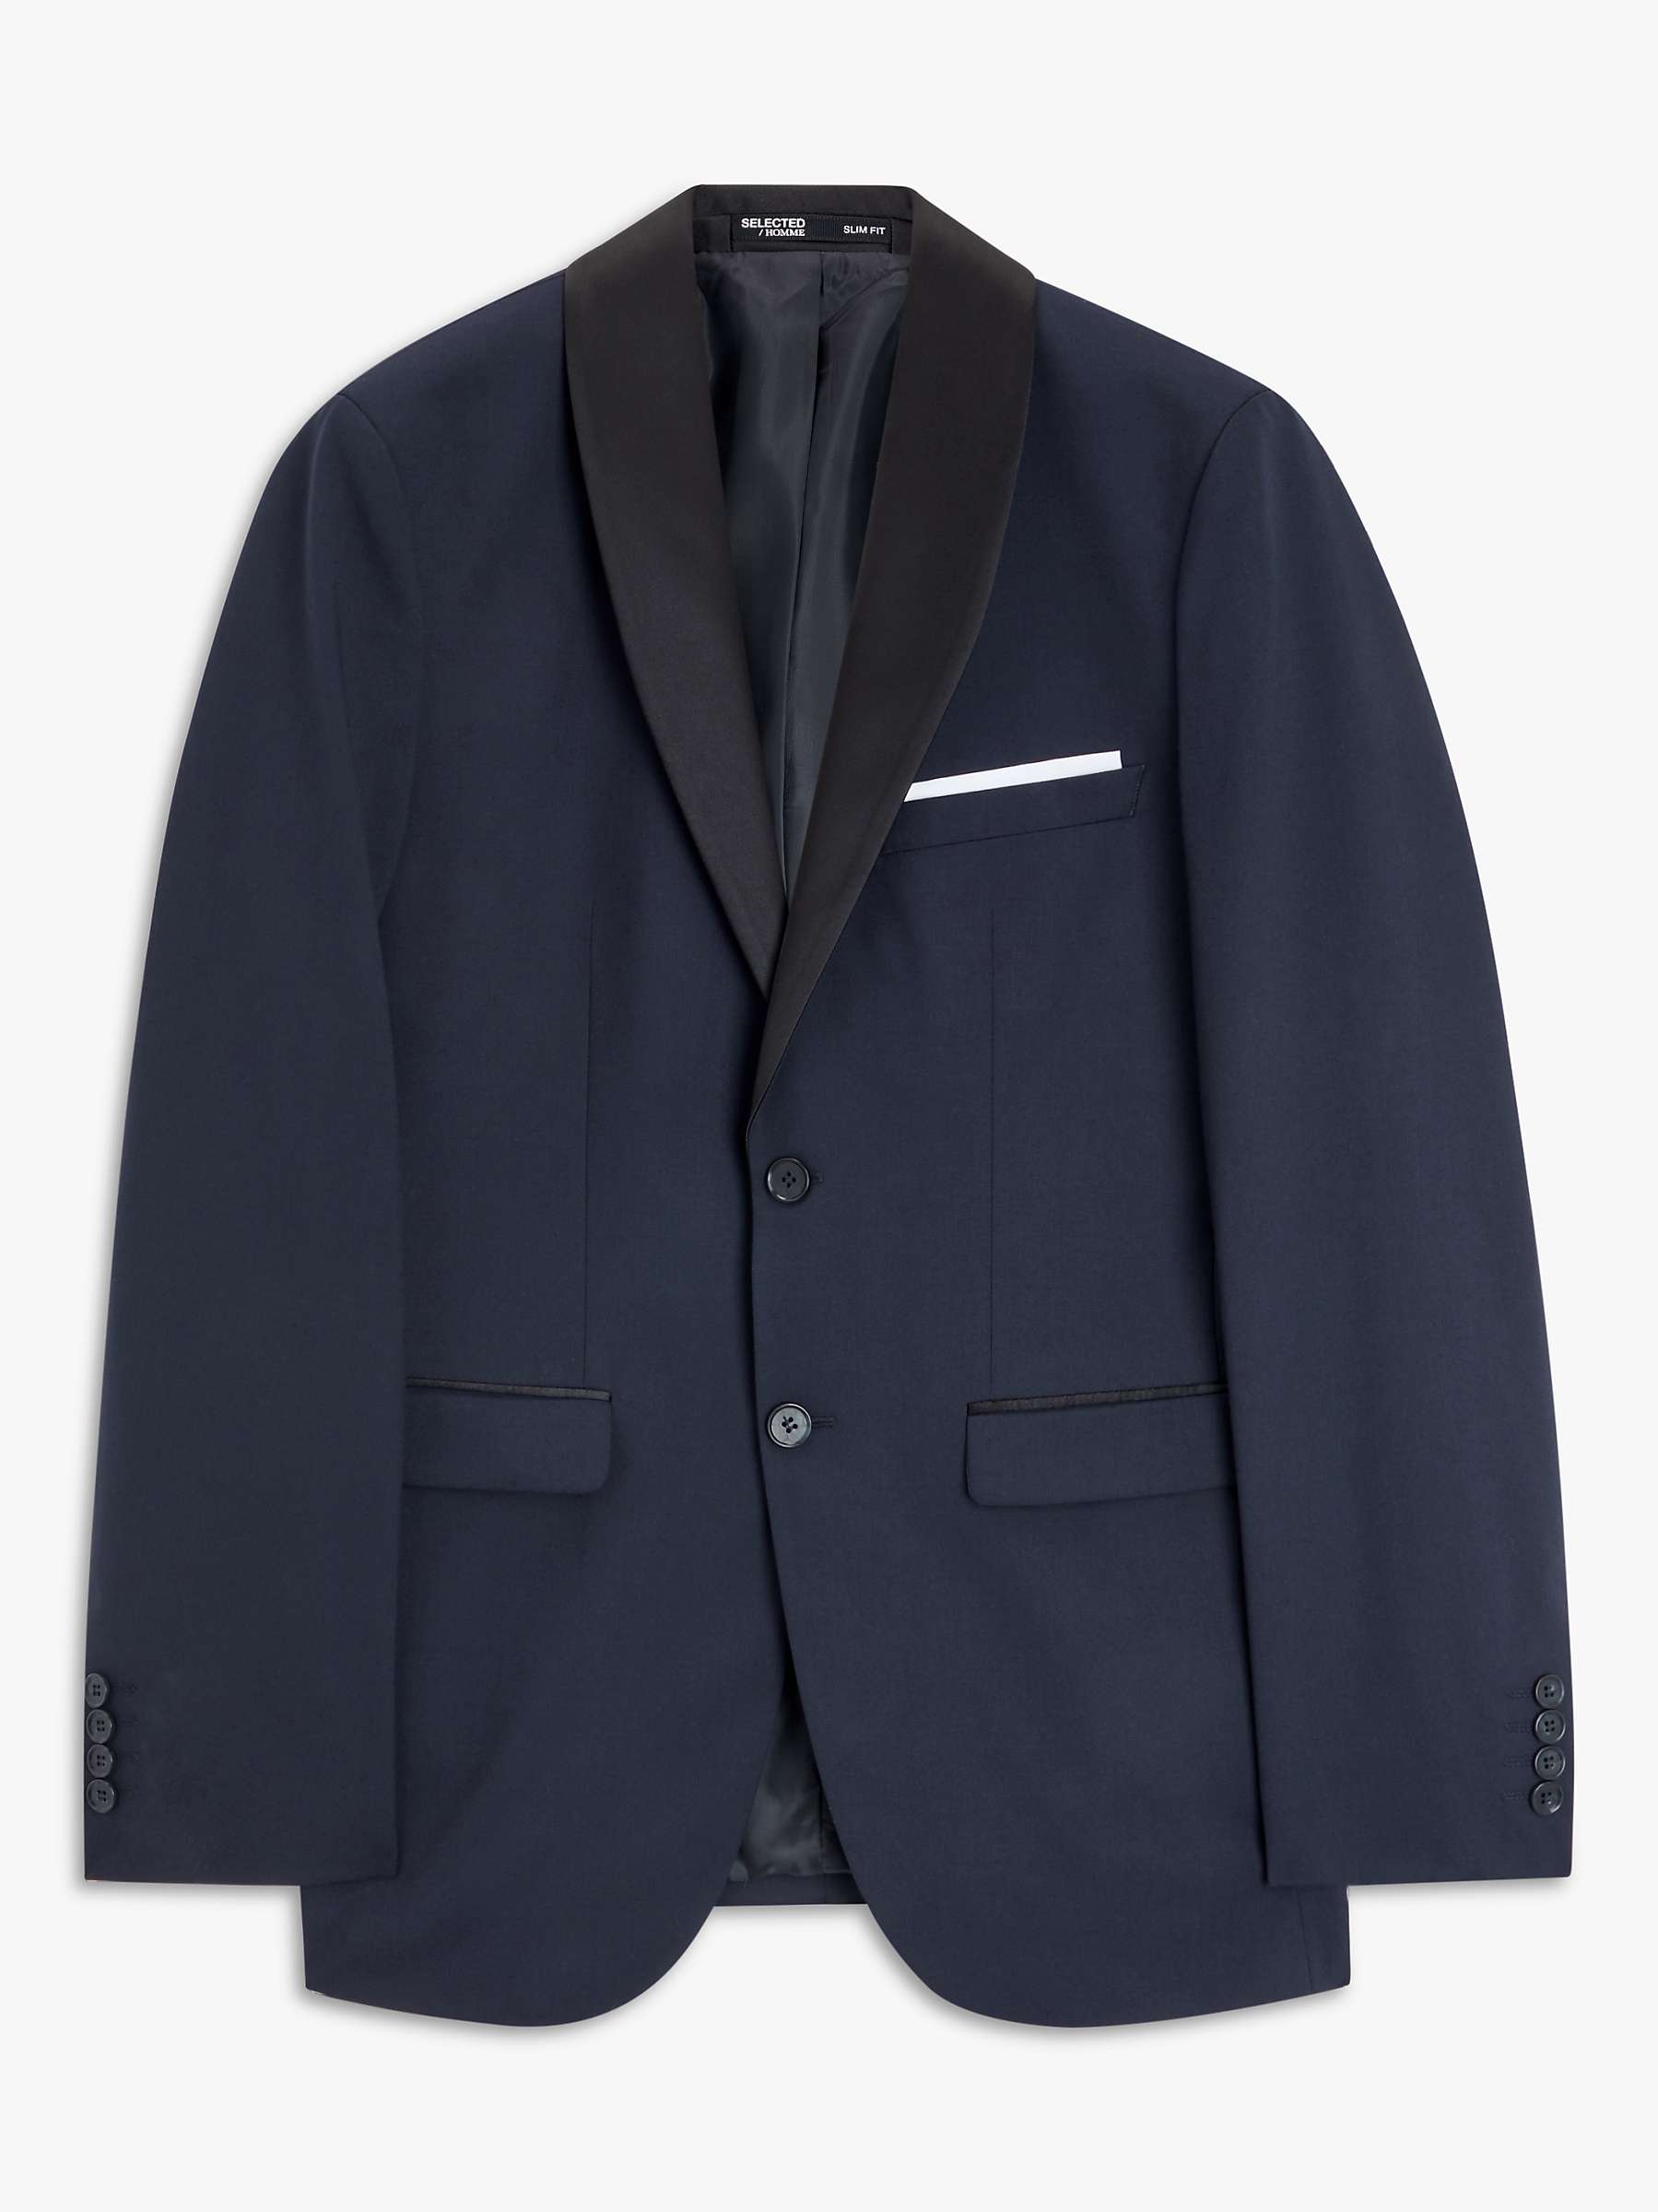 Buy SELECTED HOMME Slim Fit Shawl Tuxedo Jacket, Navy Blazer Online at johnlewis.com